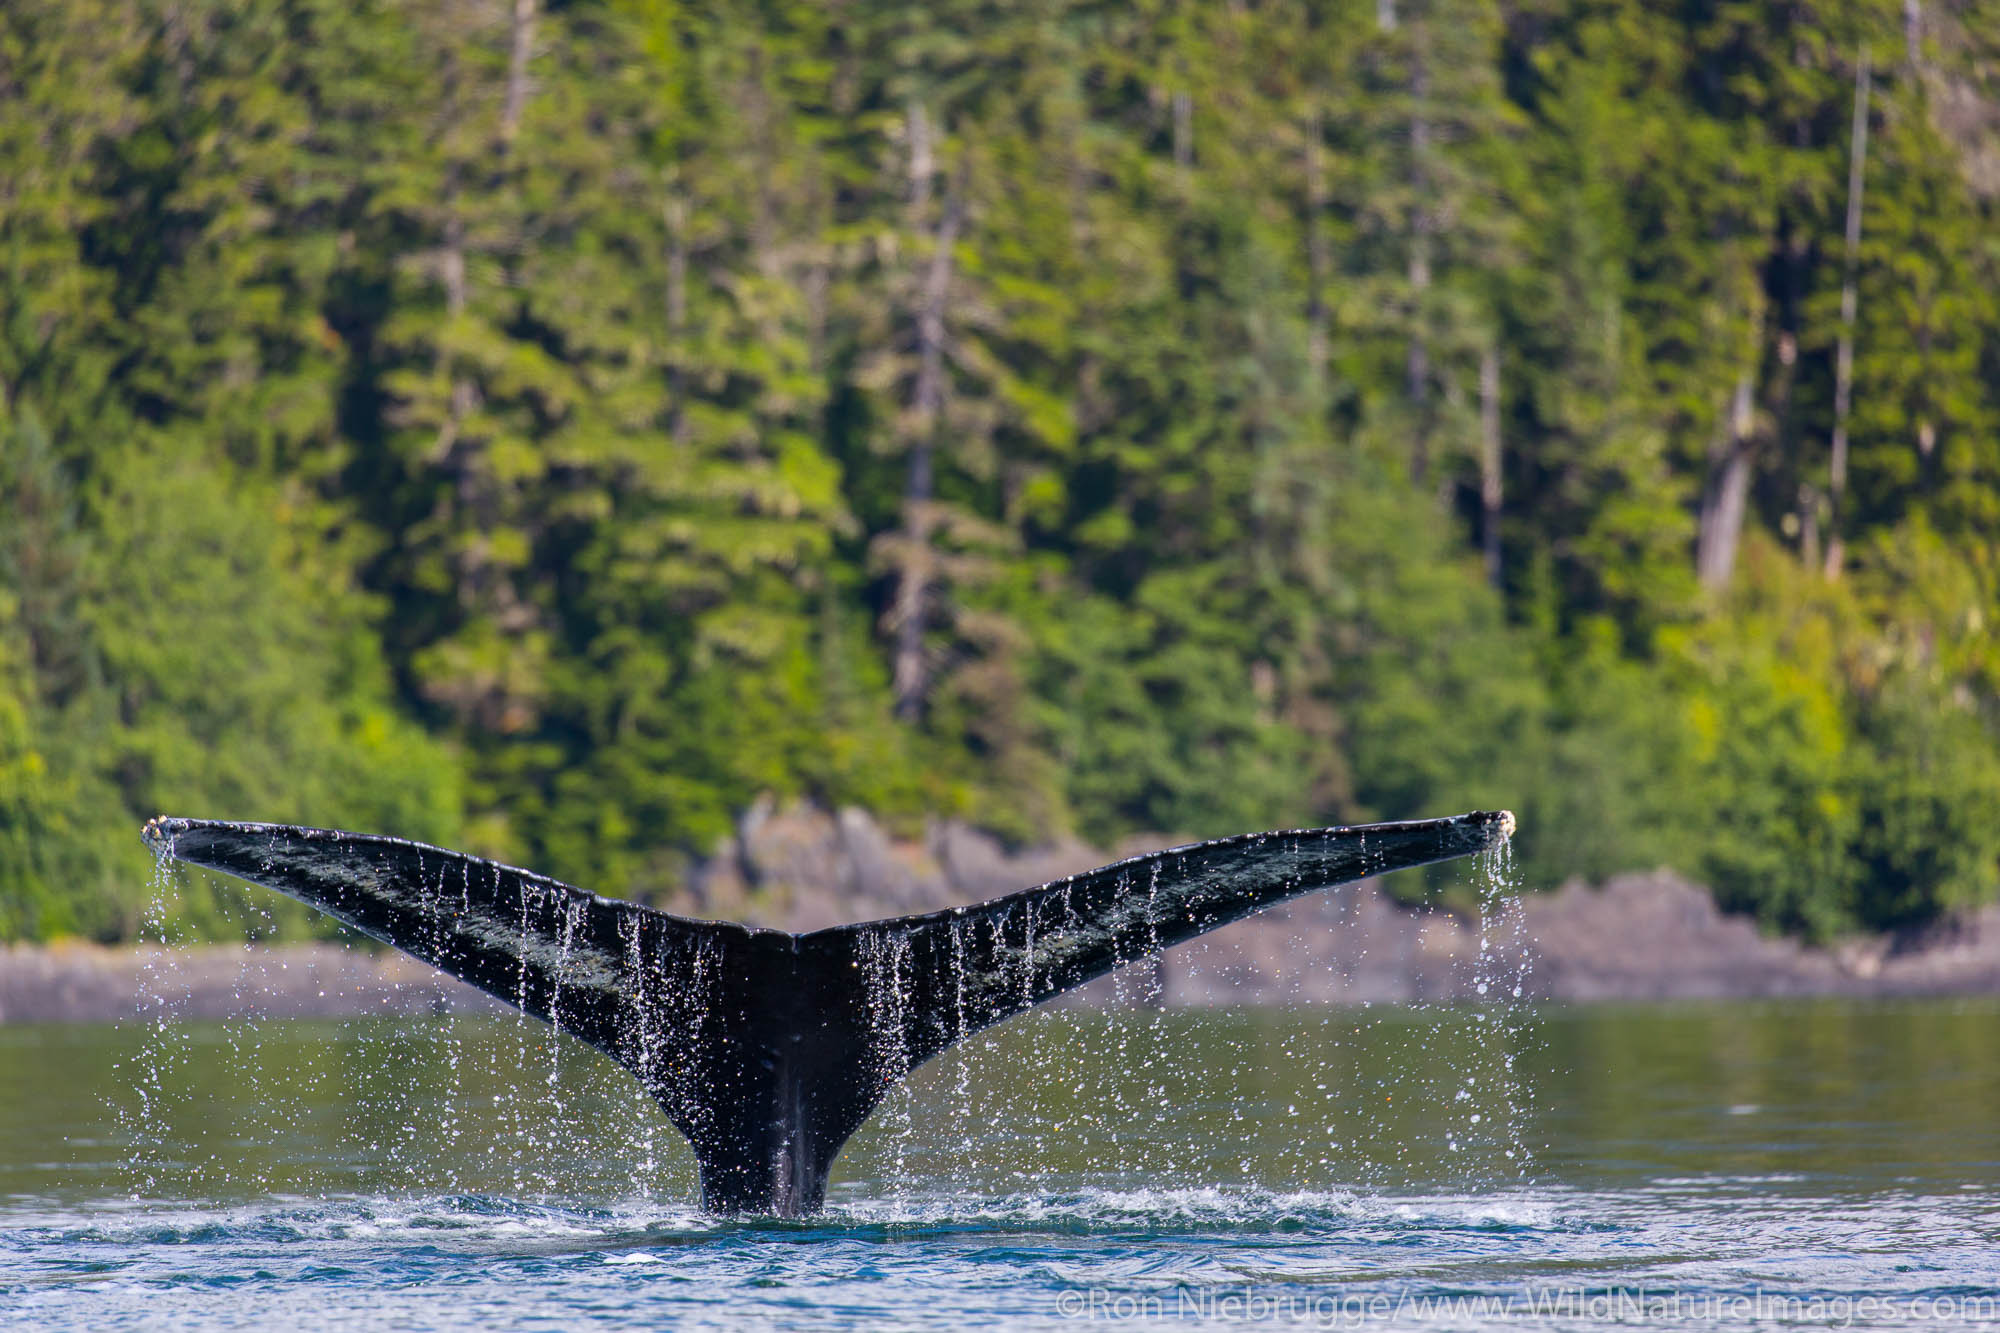 Humpback whale, Tongass National Forest, Alaska.